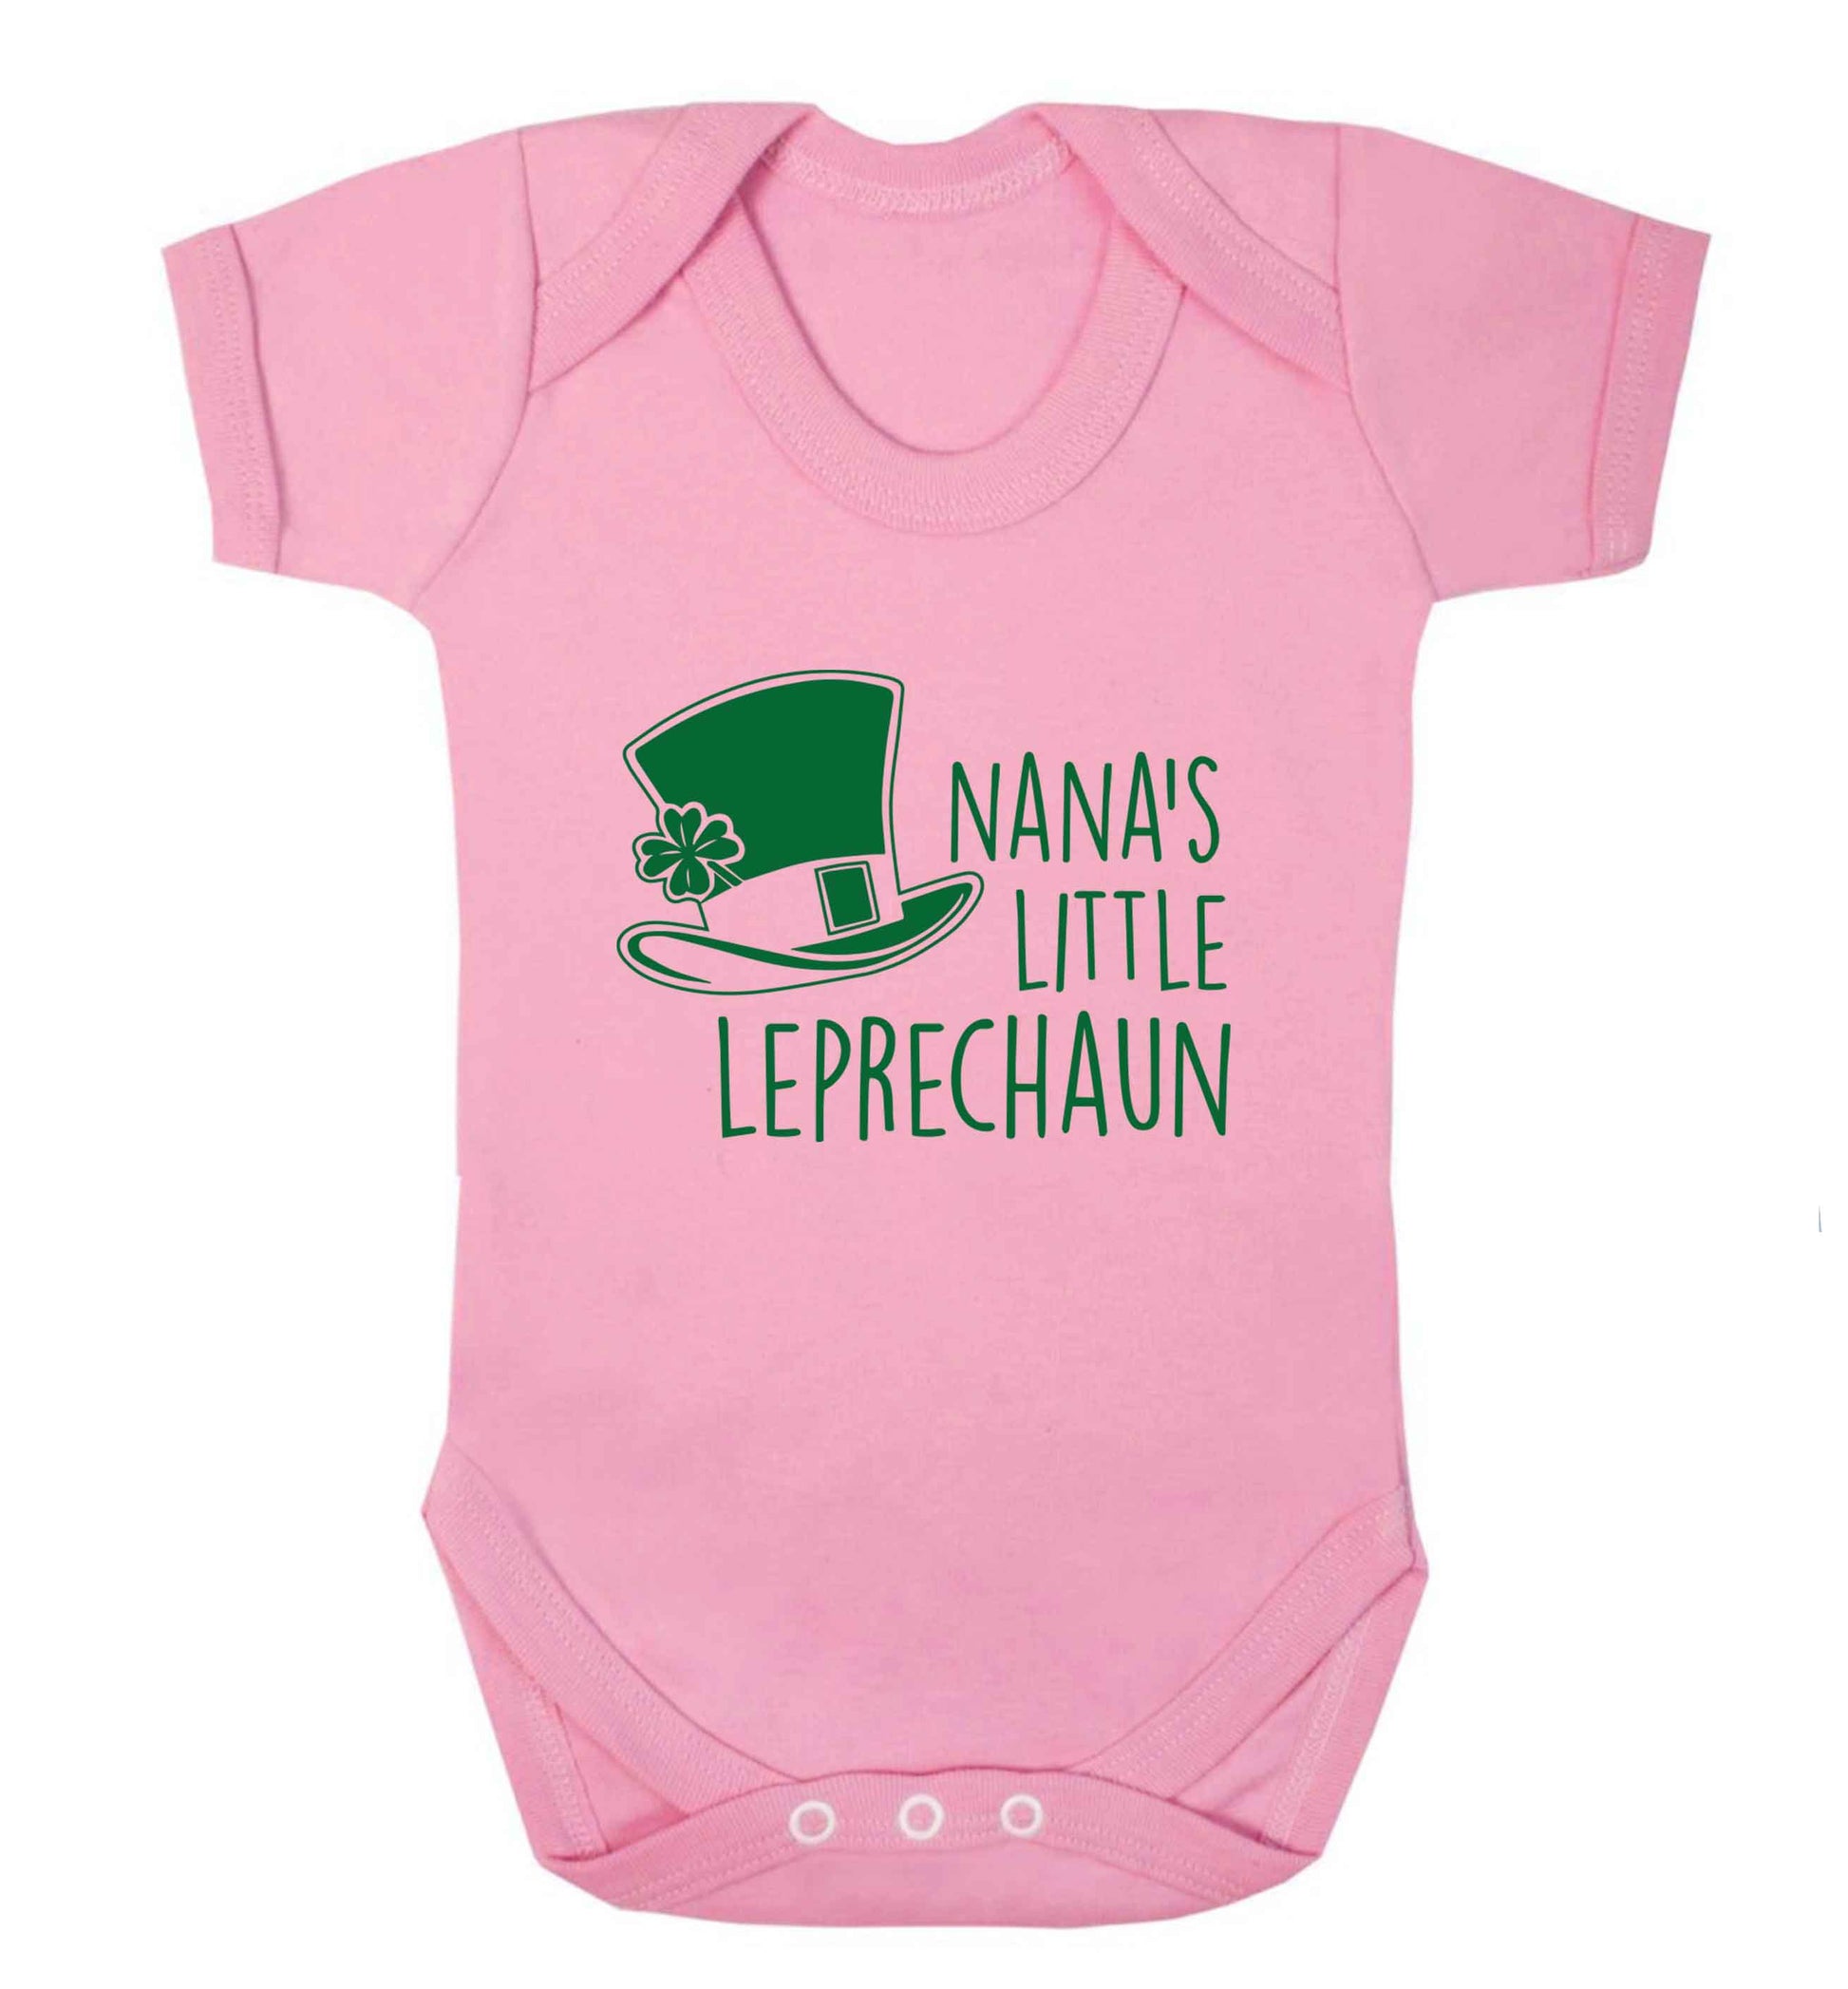 Nana's little leprechaun baby vest pale pink 18-24 months